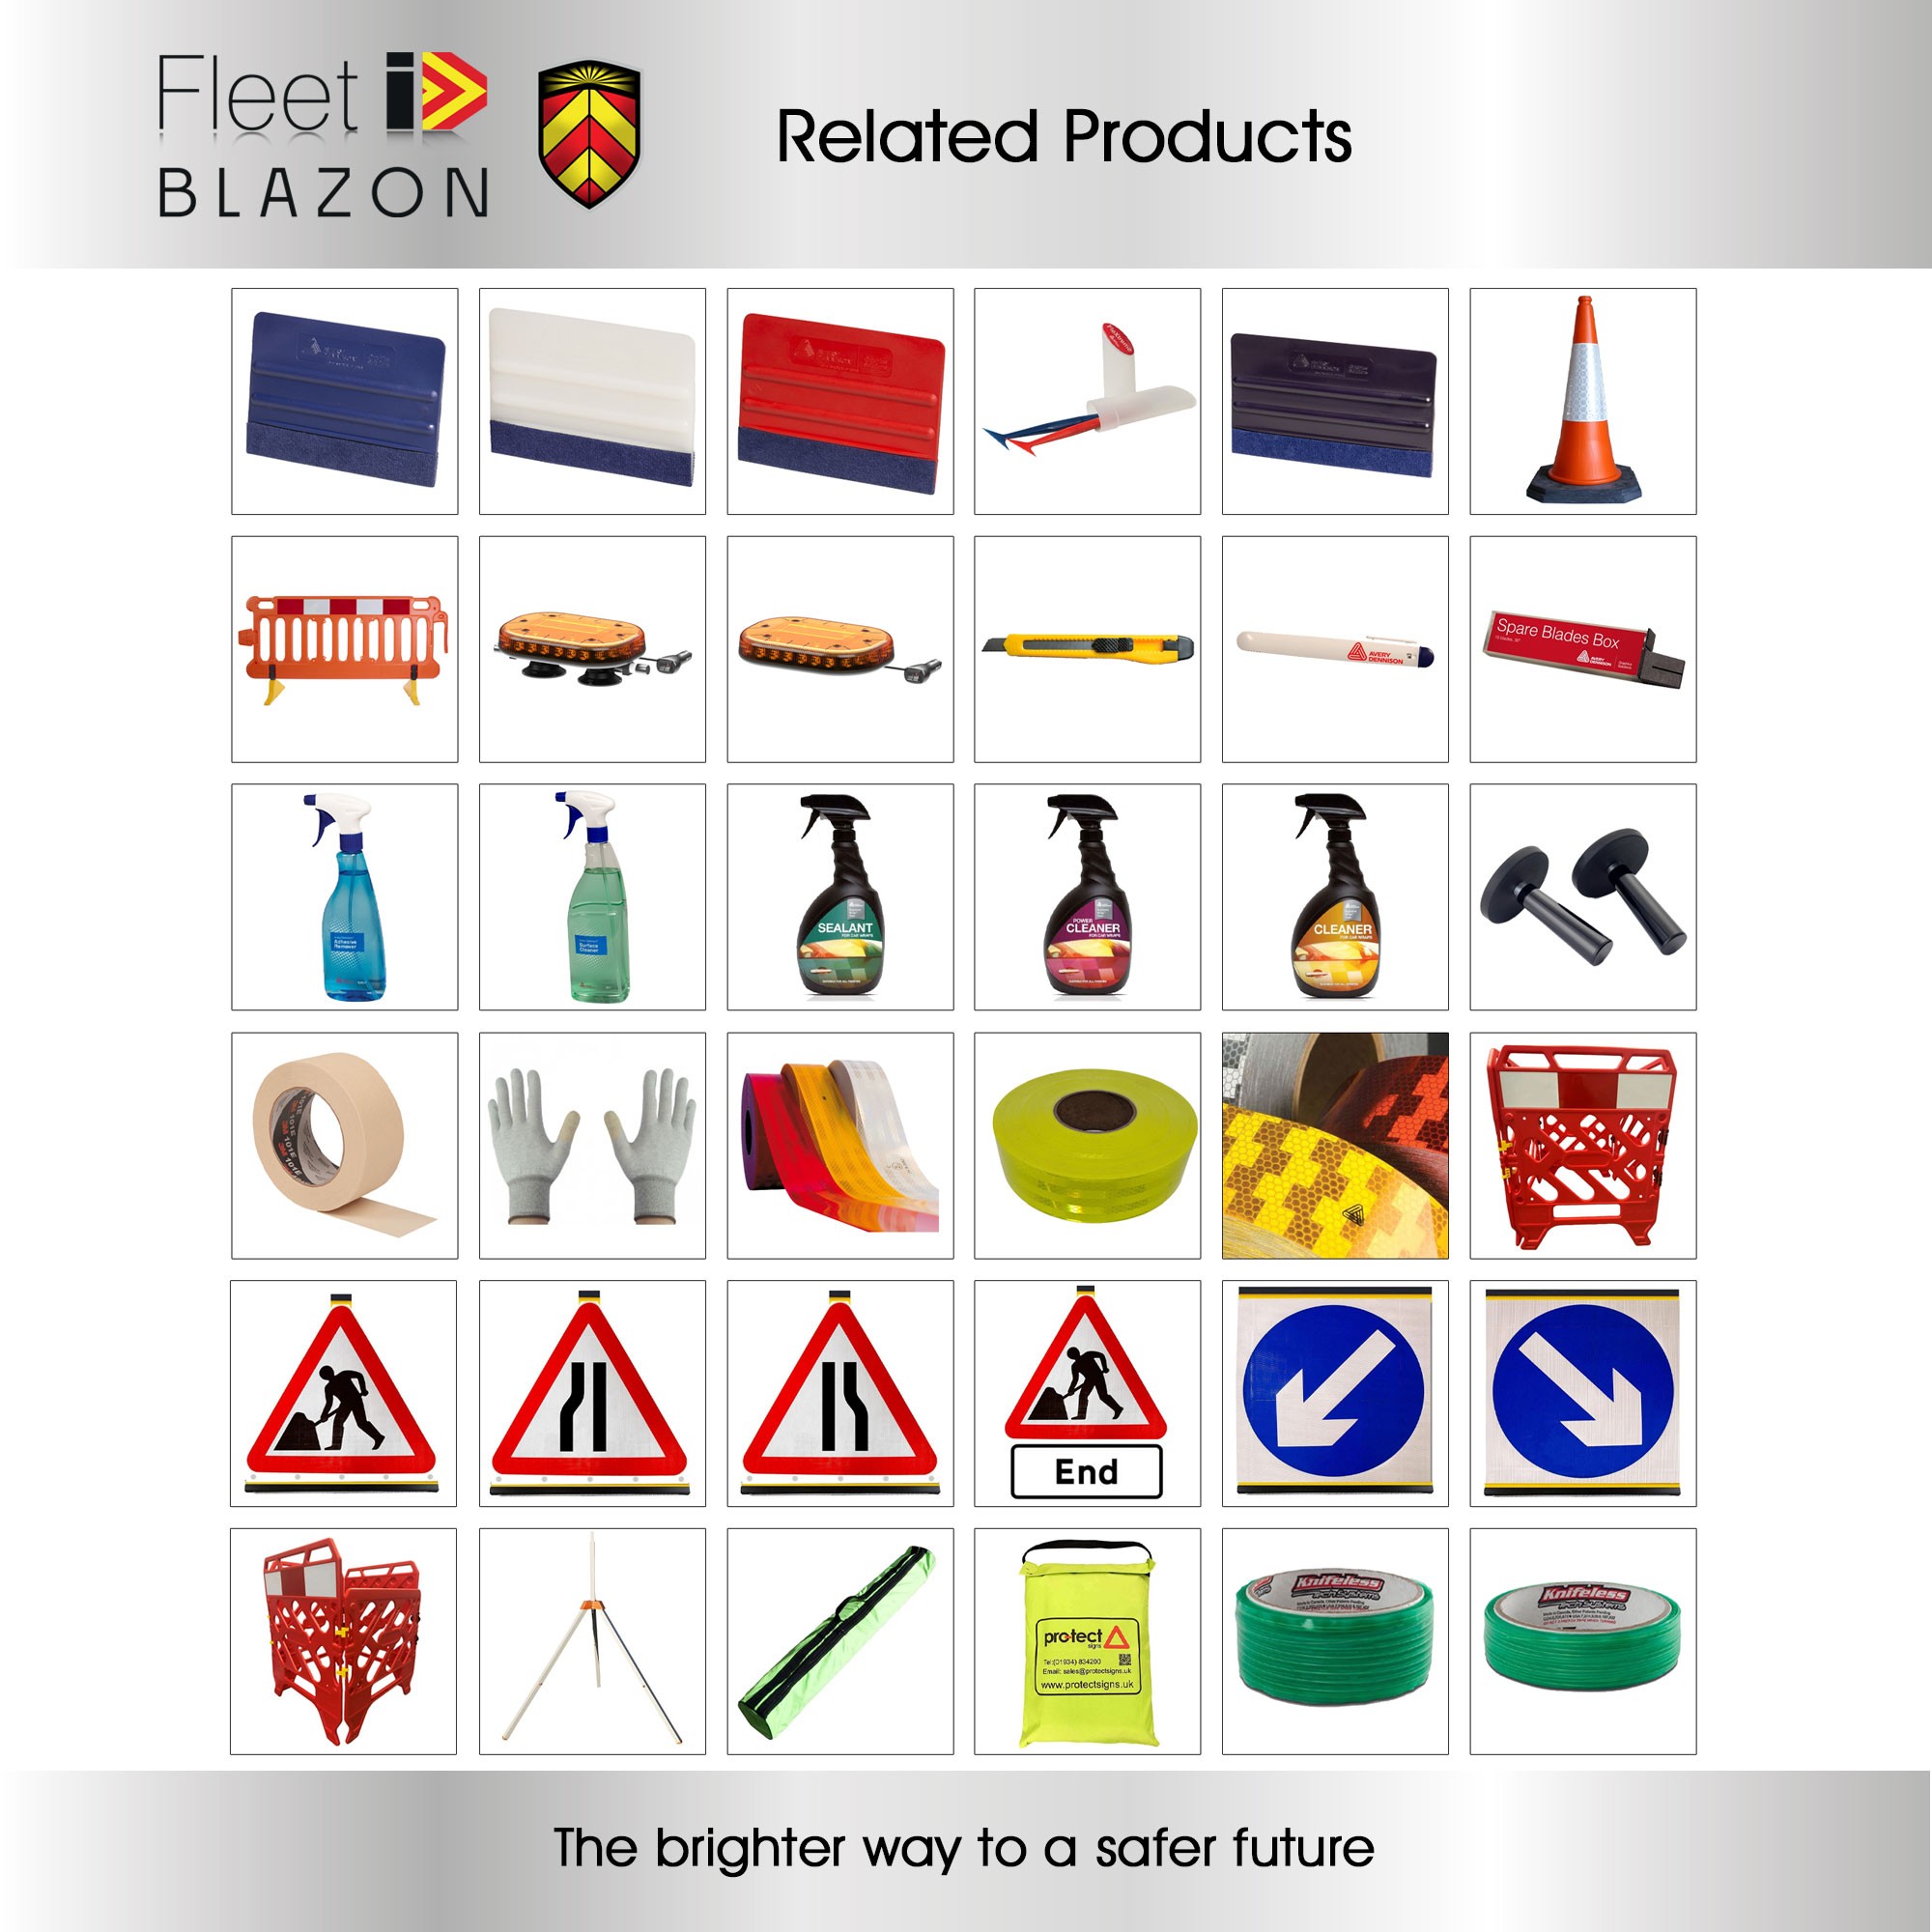 fleet id blazon related products